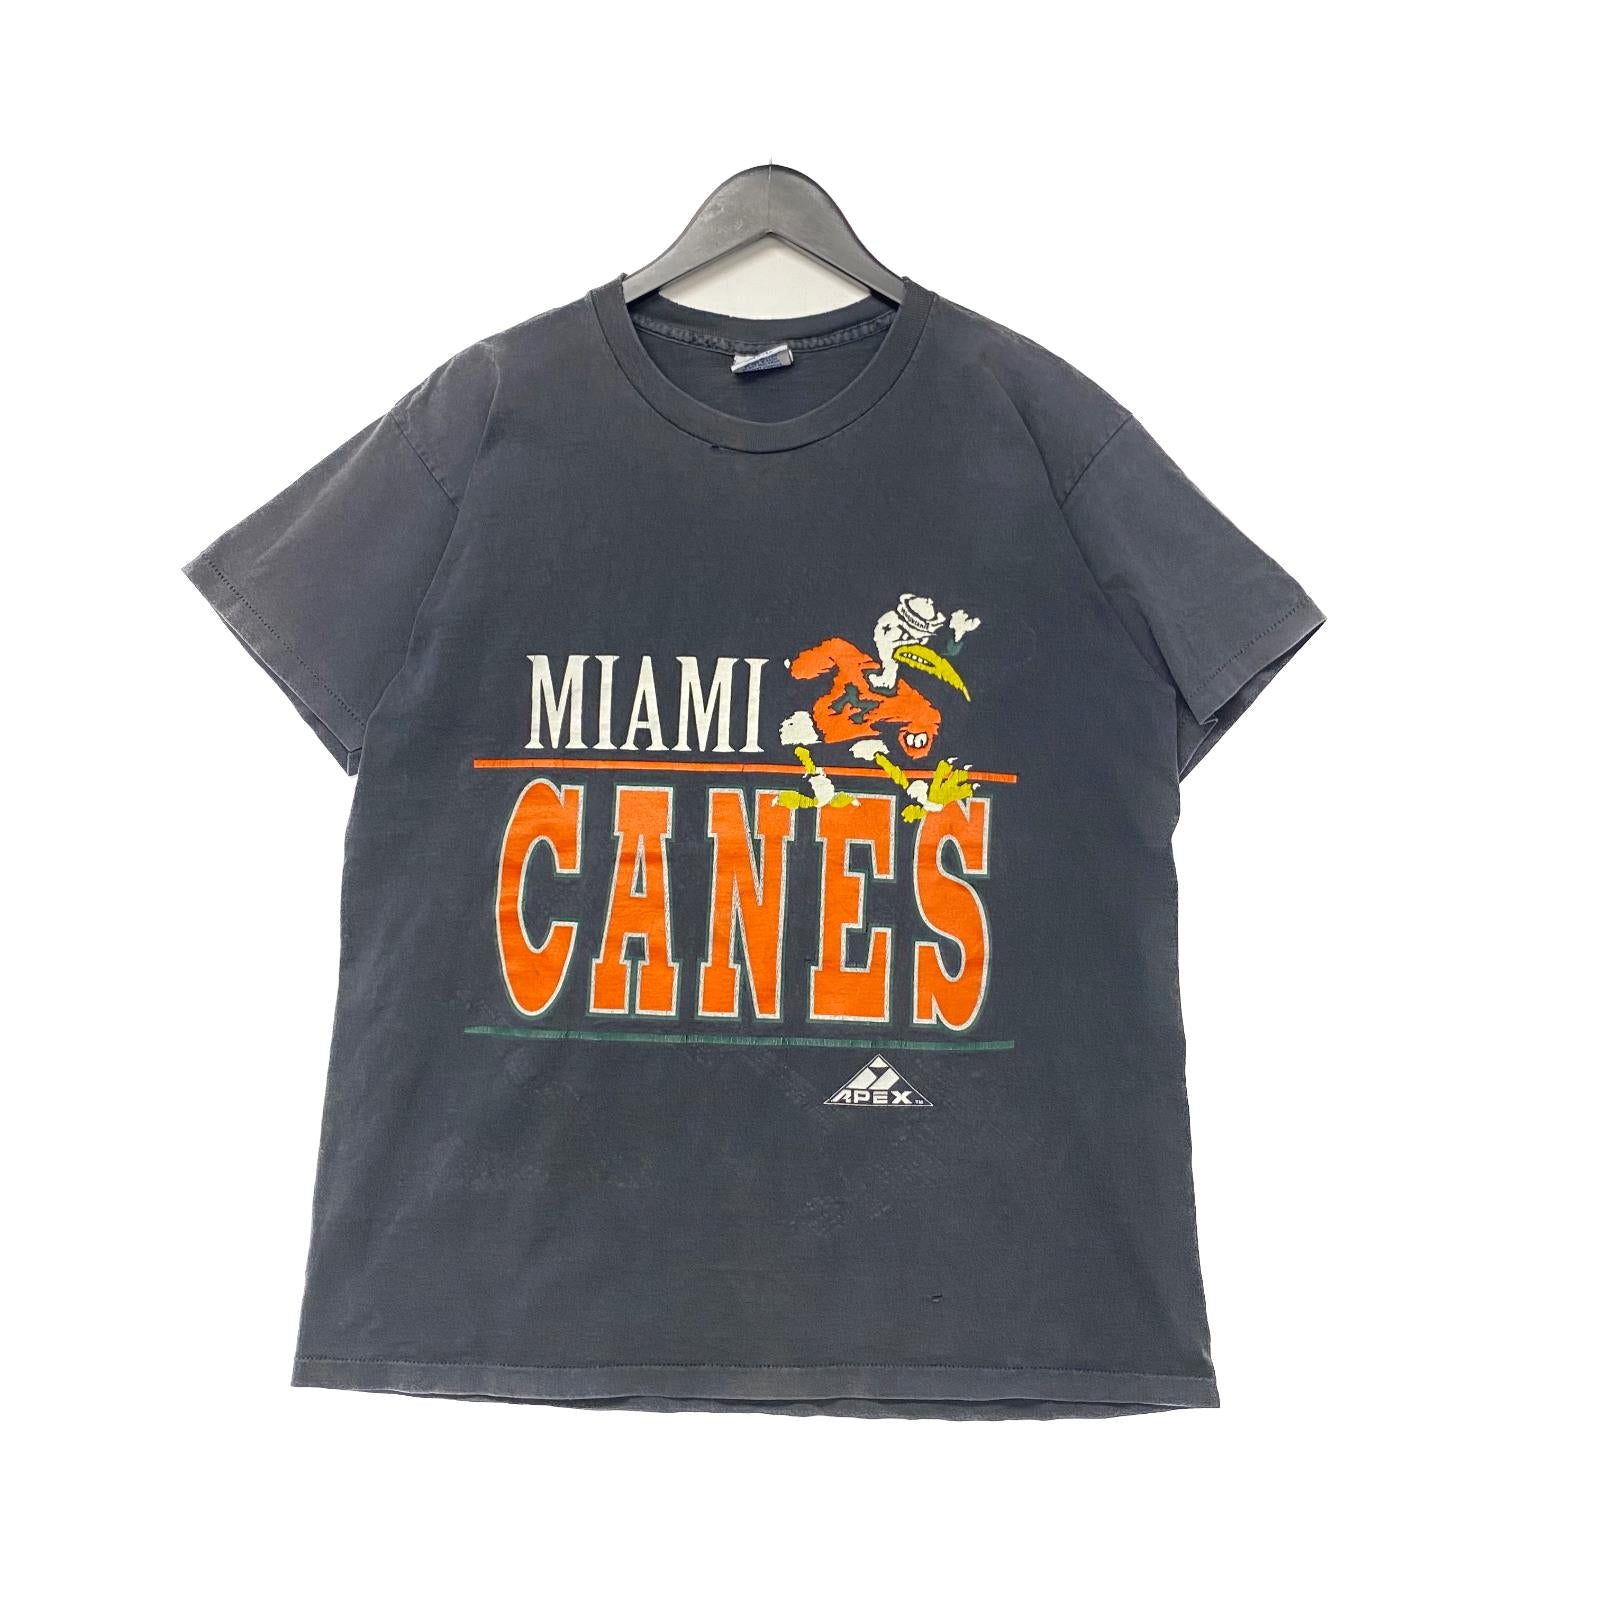 Miami Canes University T-shirt Size L